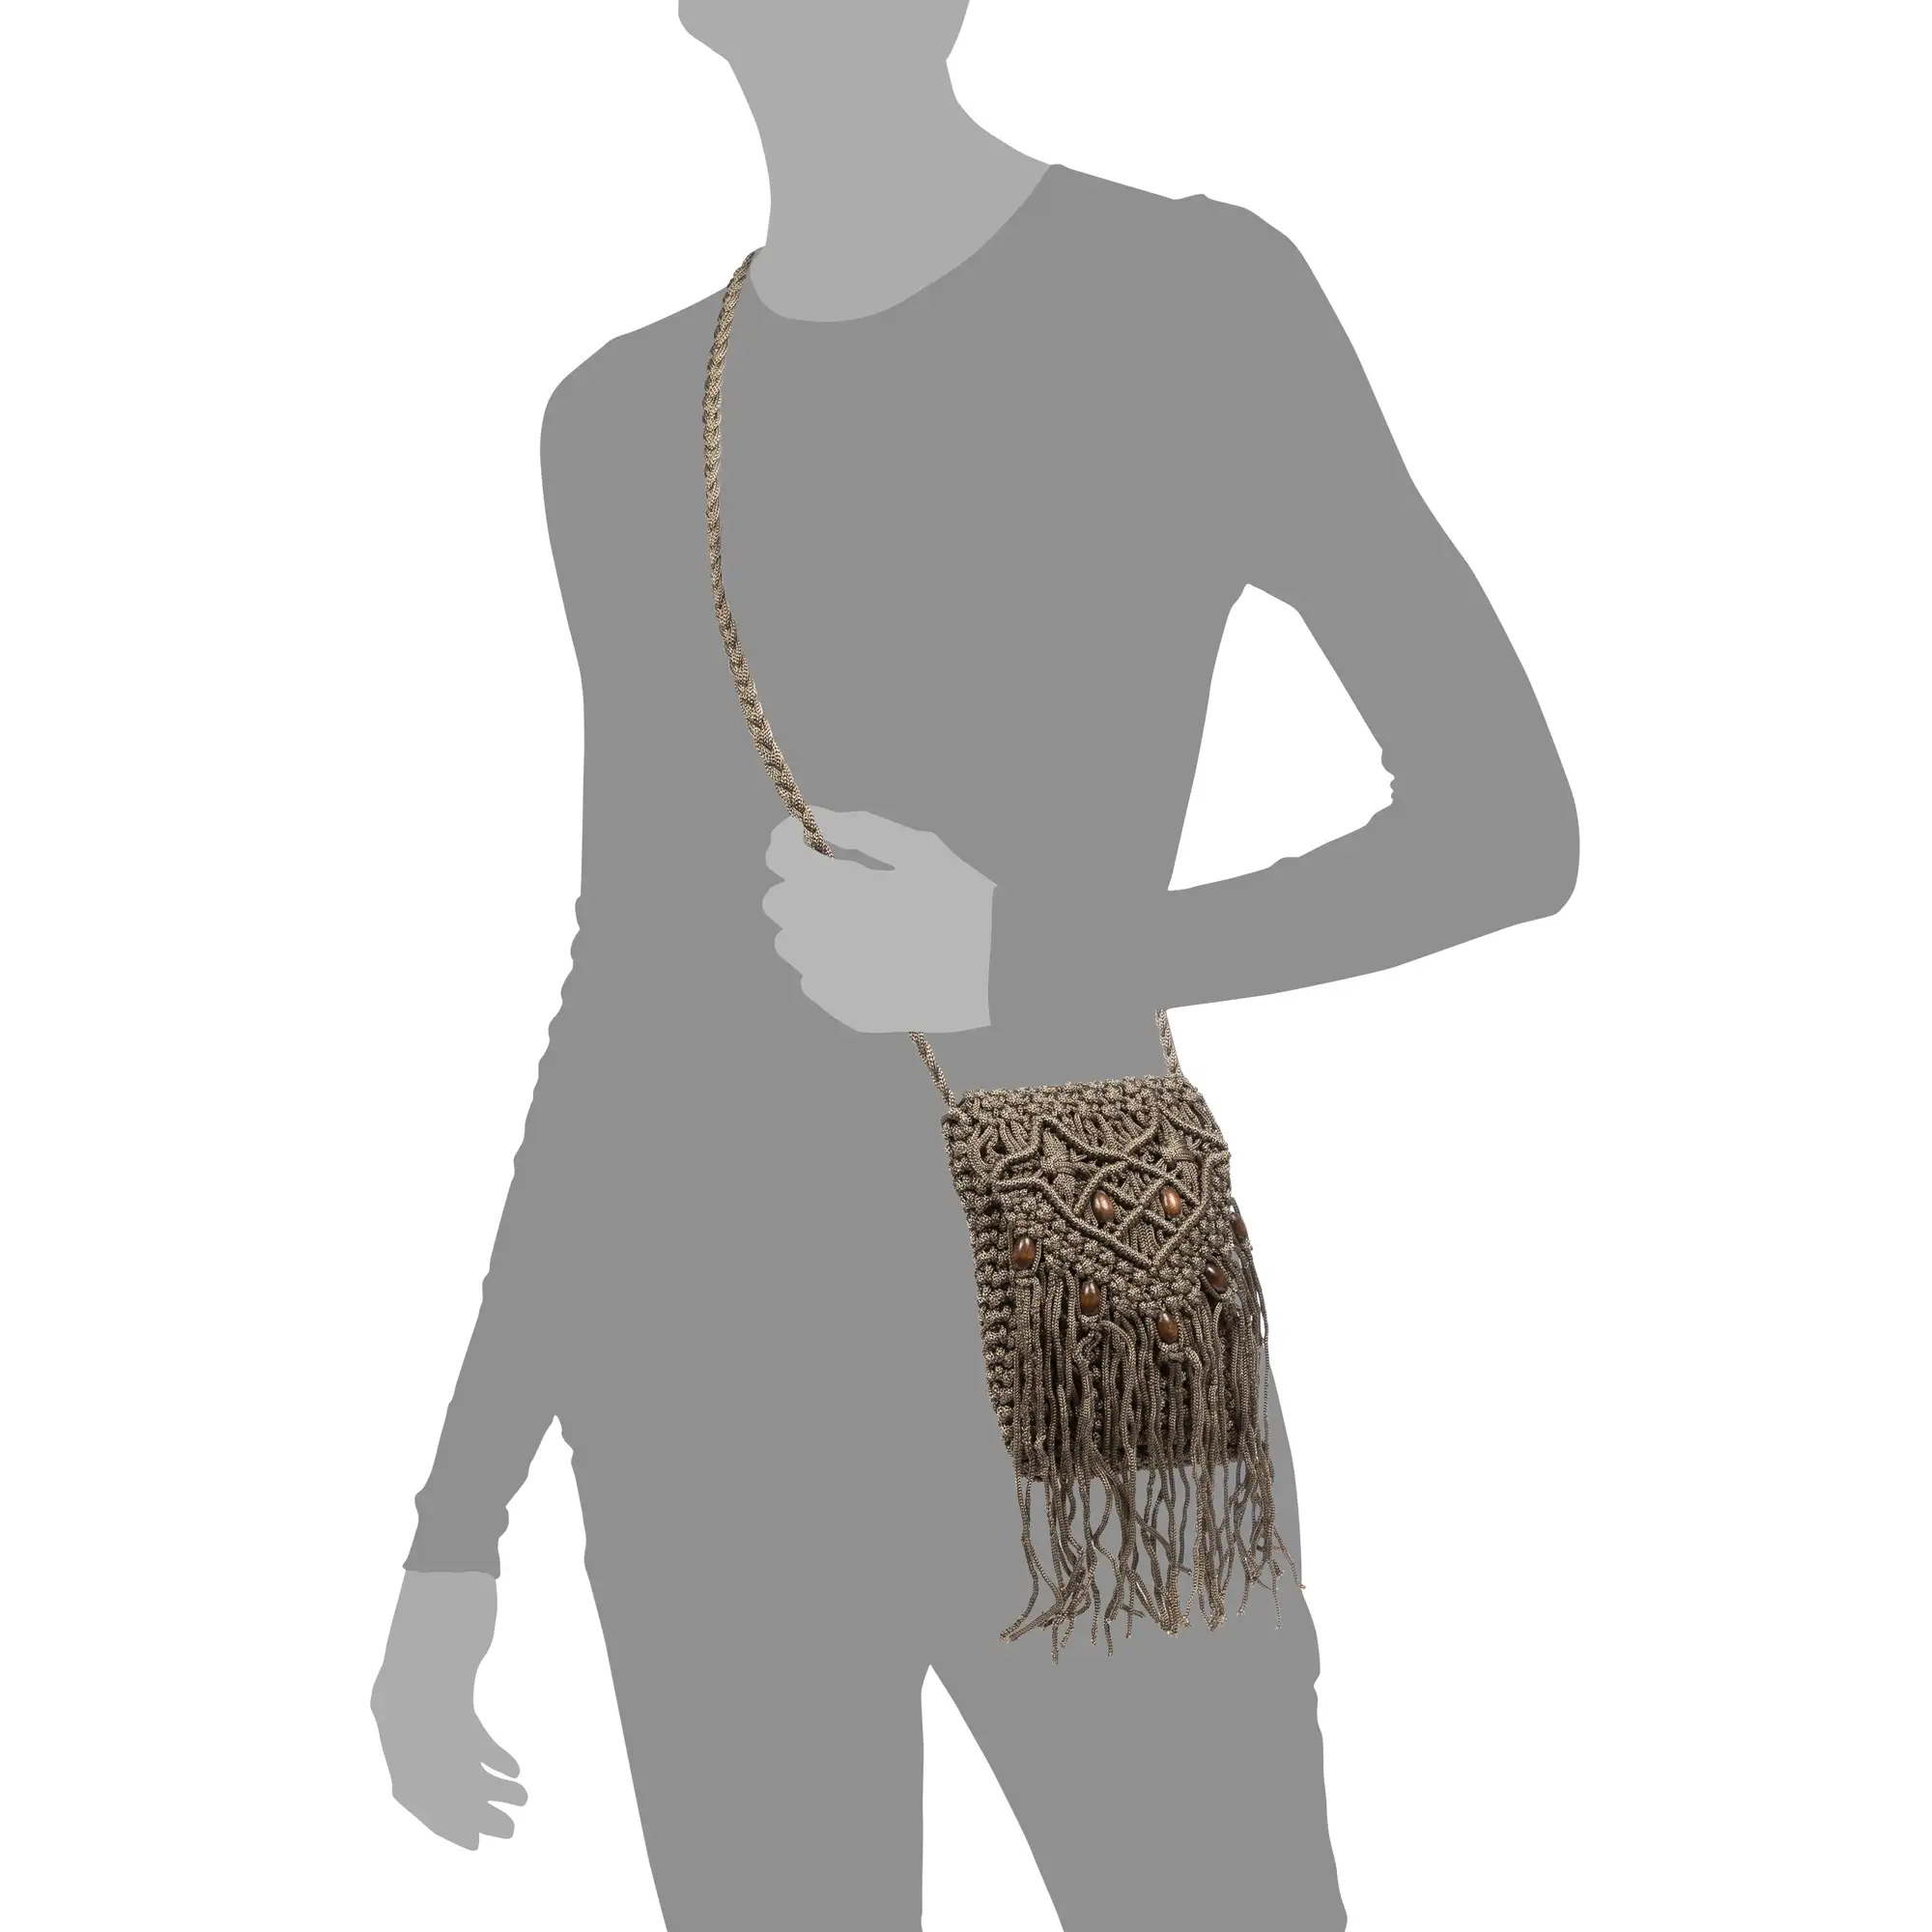  Gemona Bolso bandolera Mujer. Tejido Algodón Crochet  